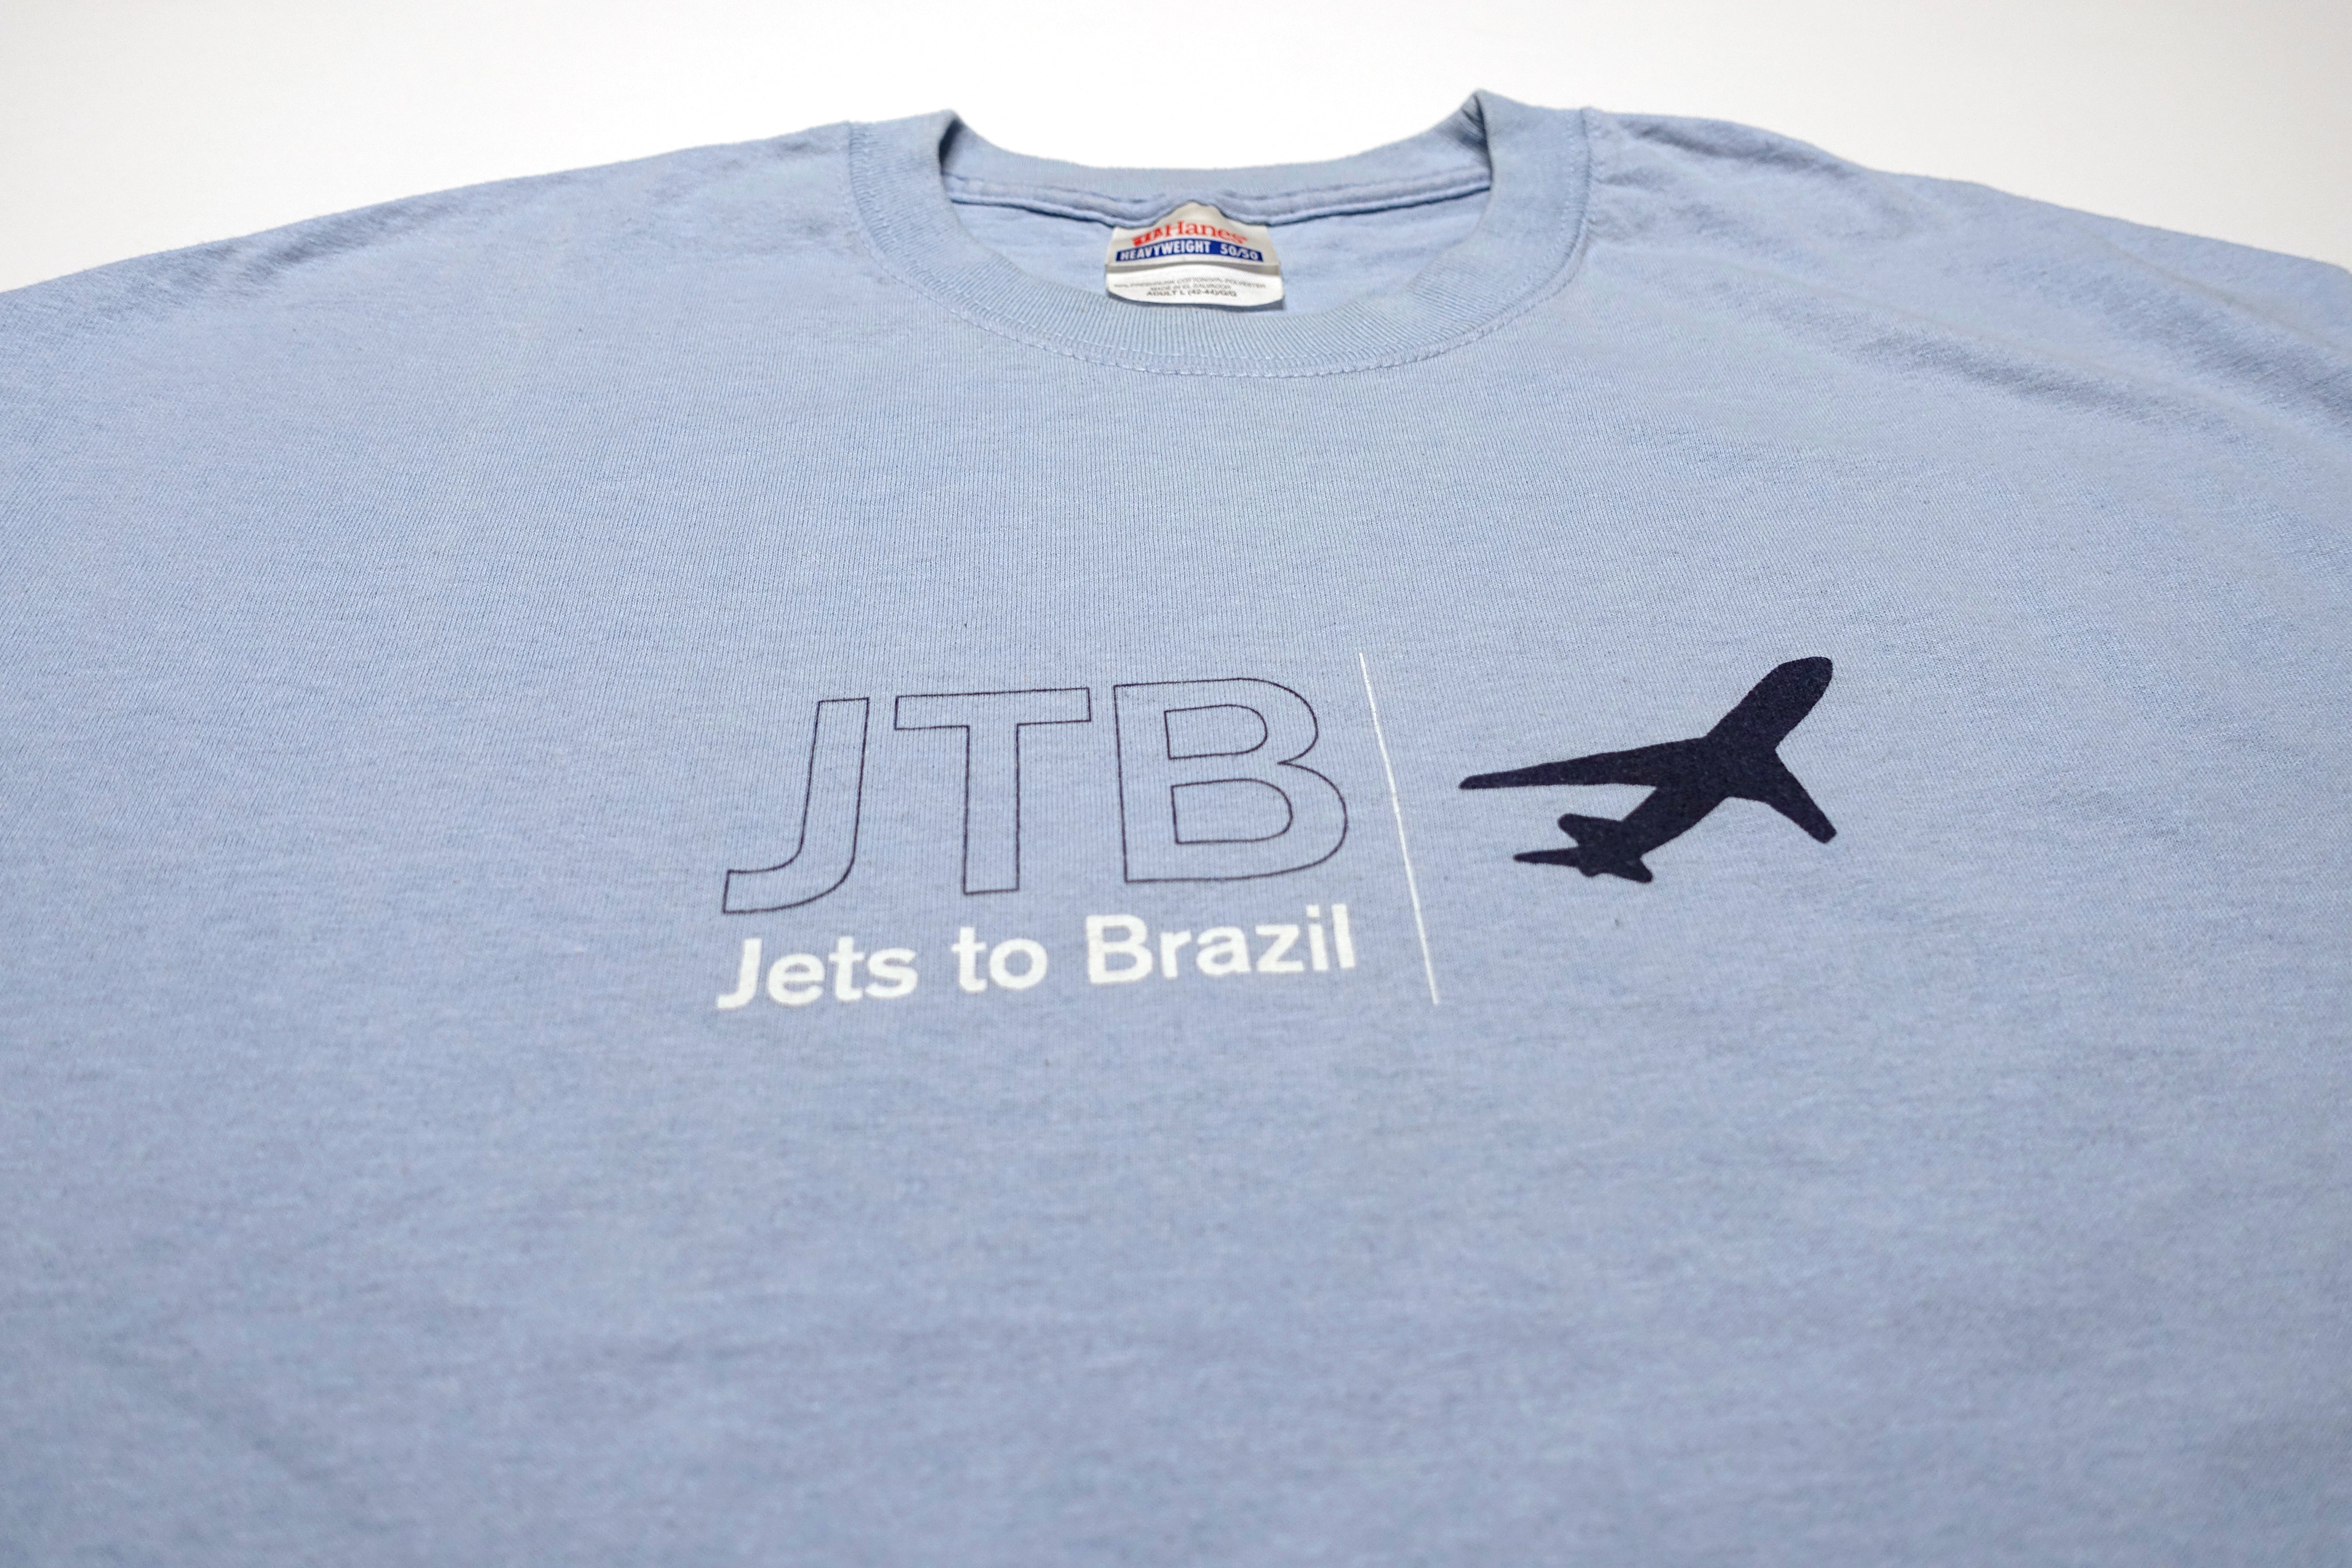 Jets To Brazil - JTB Airlines Tour Shirt Size Large